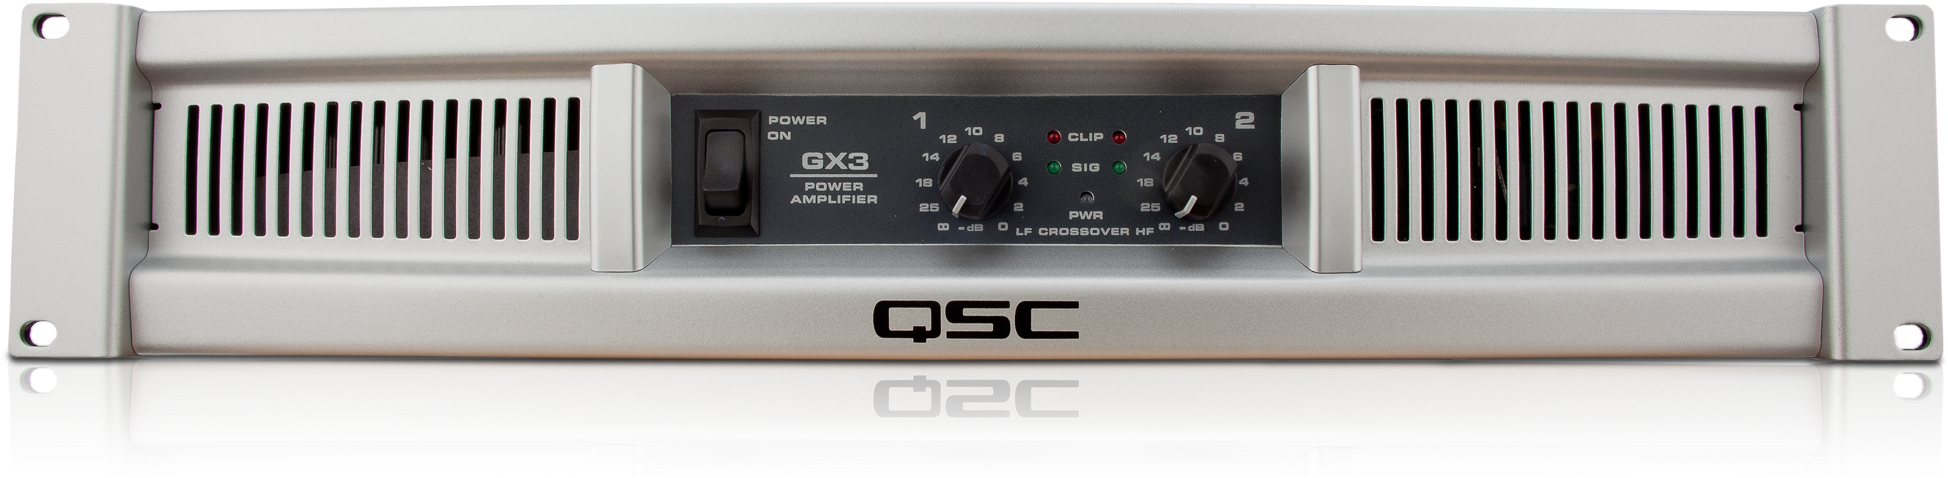 Amplificador Qsc Gdx8 Clipart (2048x1536), Png Download